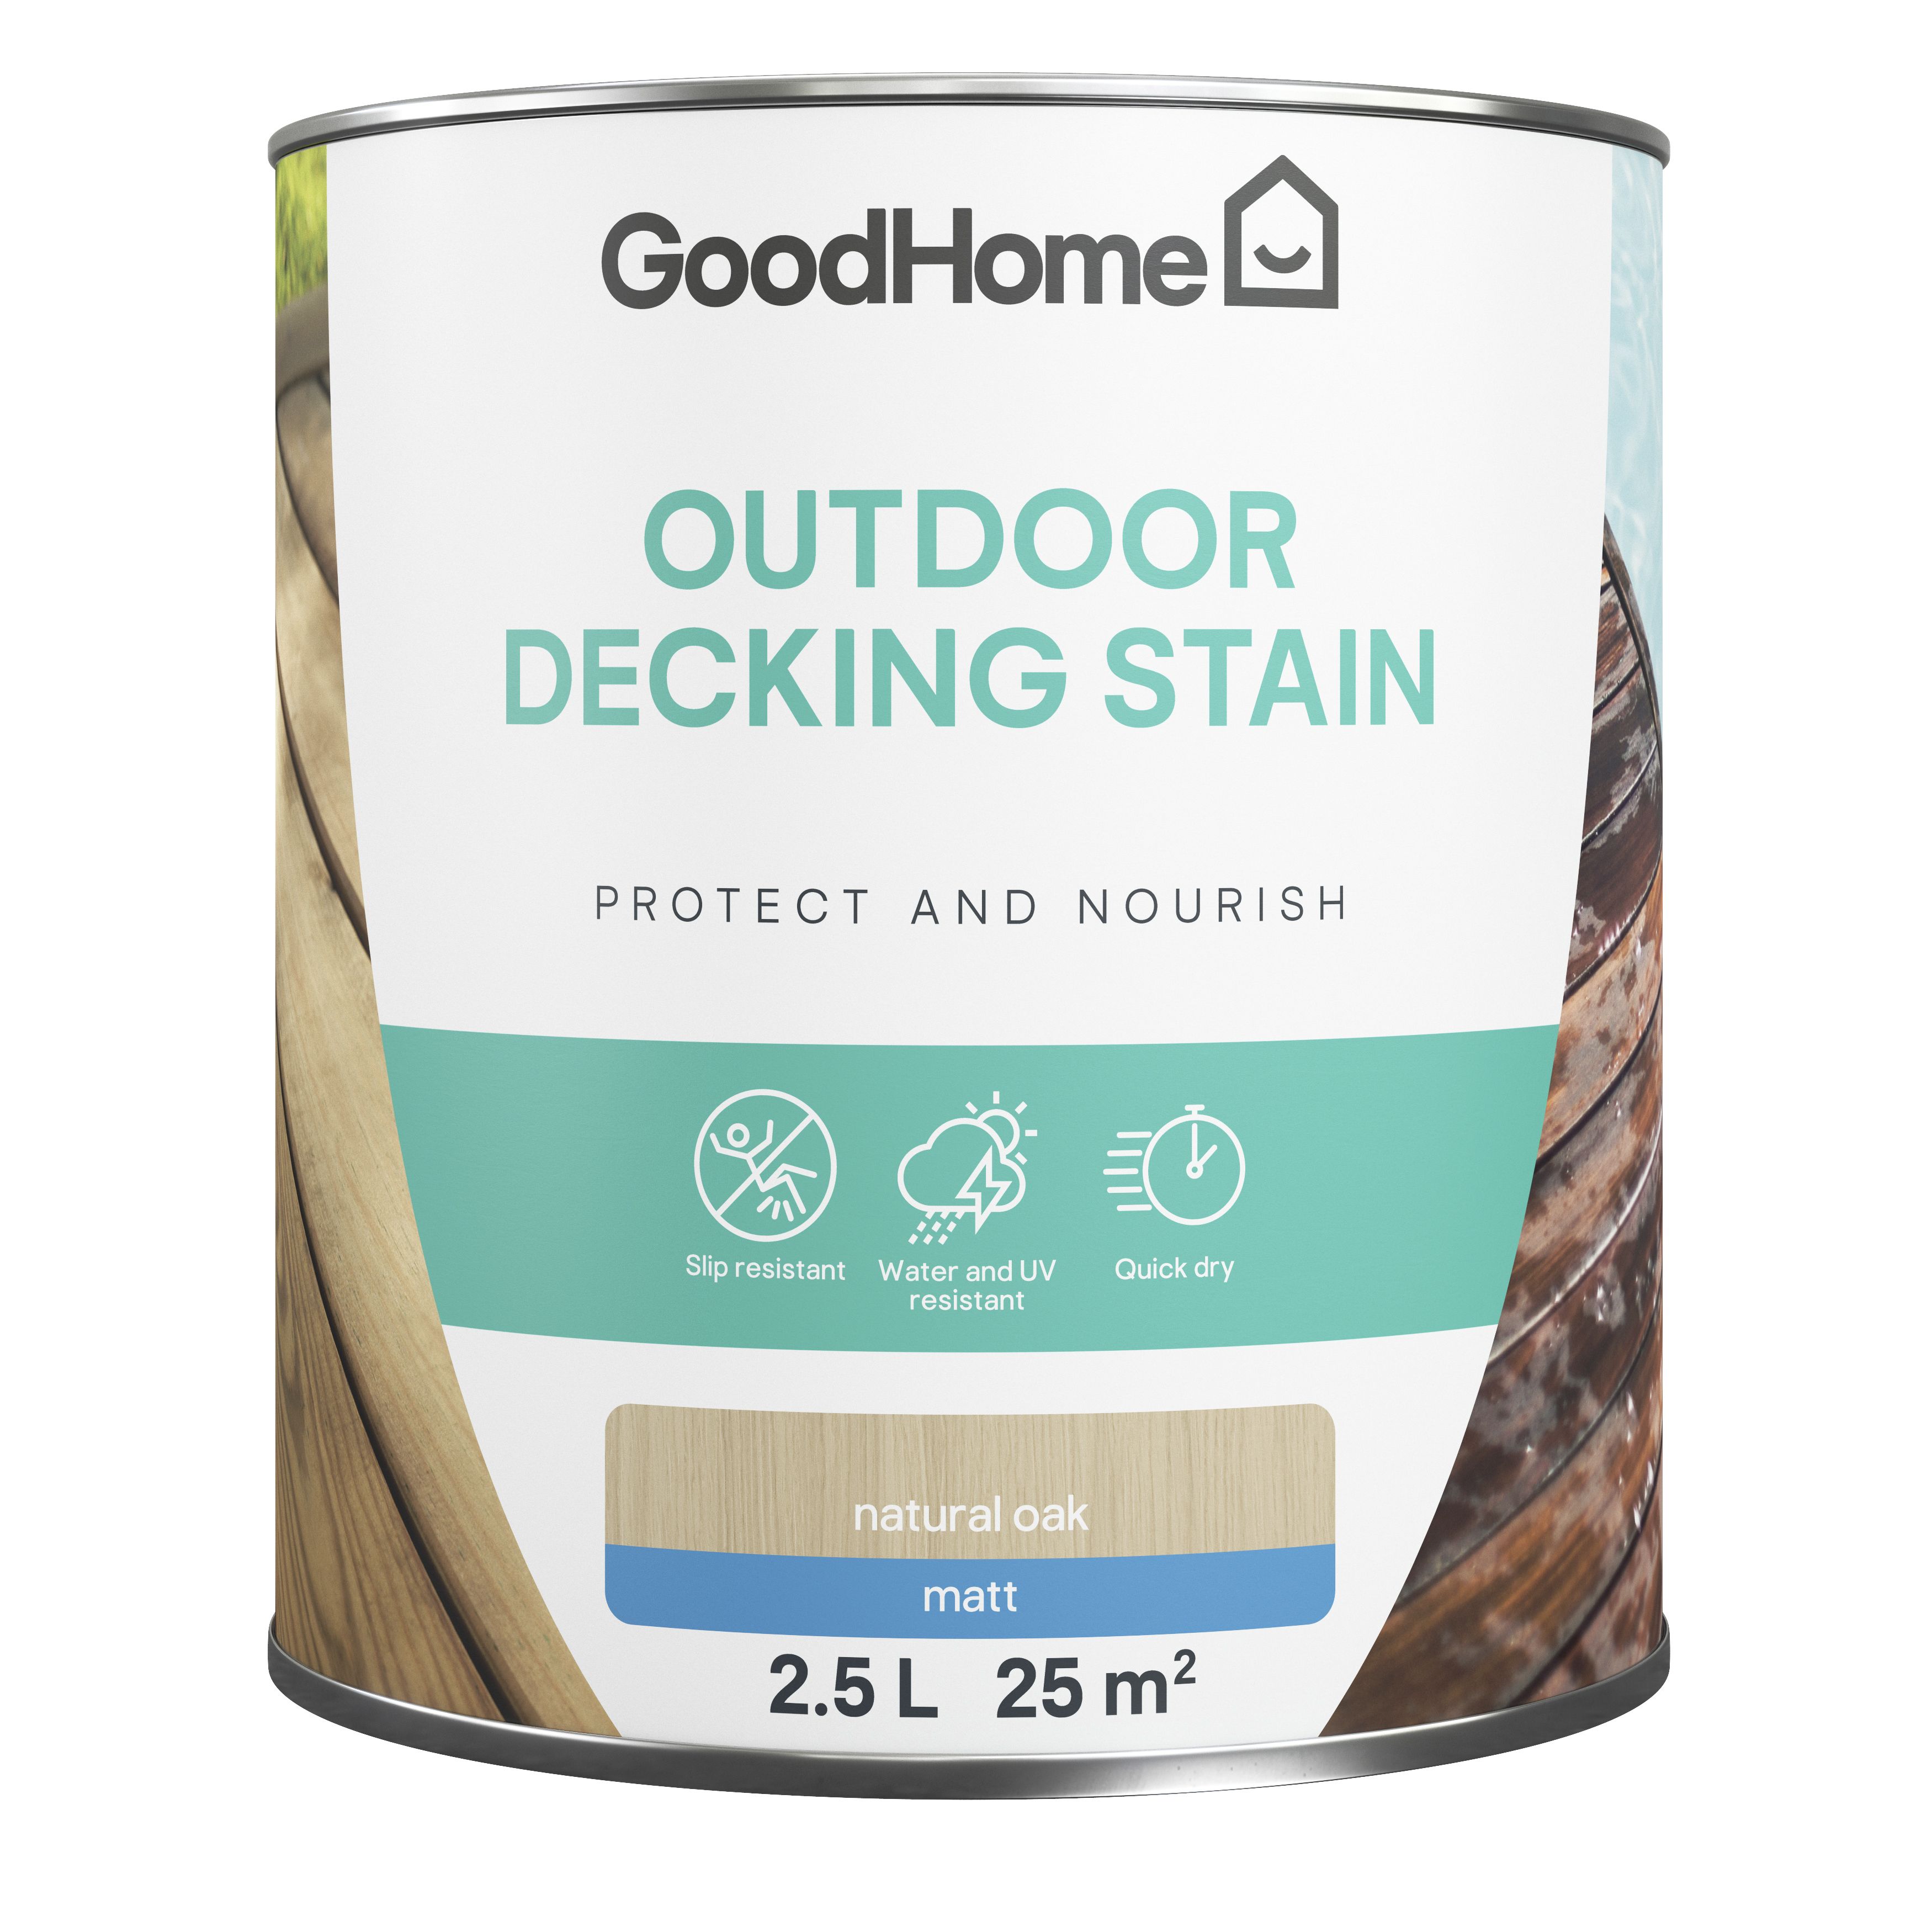 GoodHome Natural oak Matt Quick dry Decking Wood stain, 2.5L